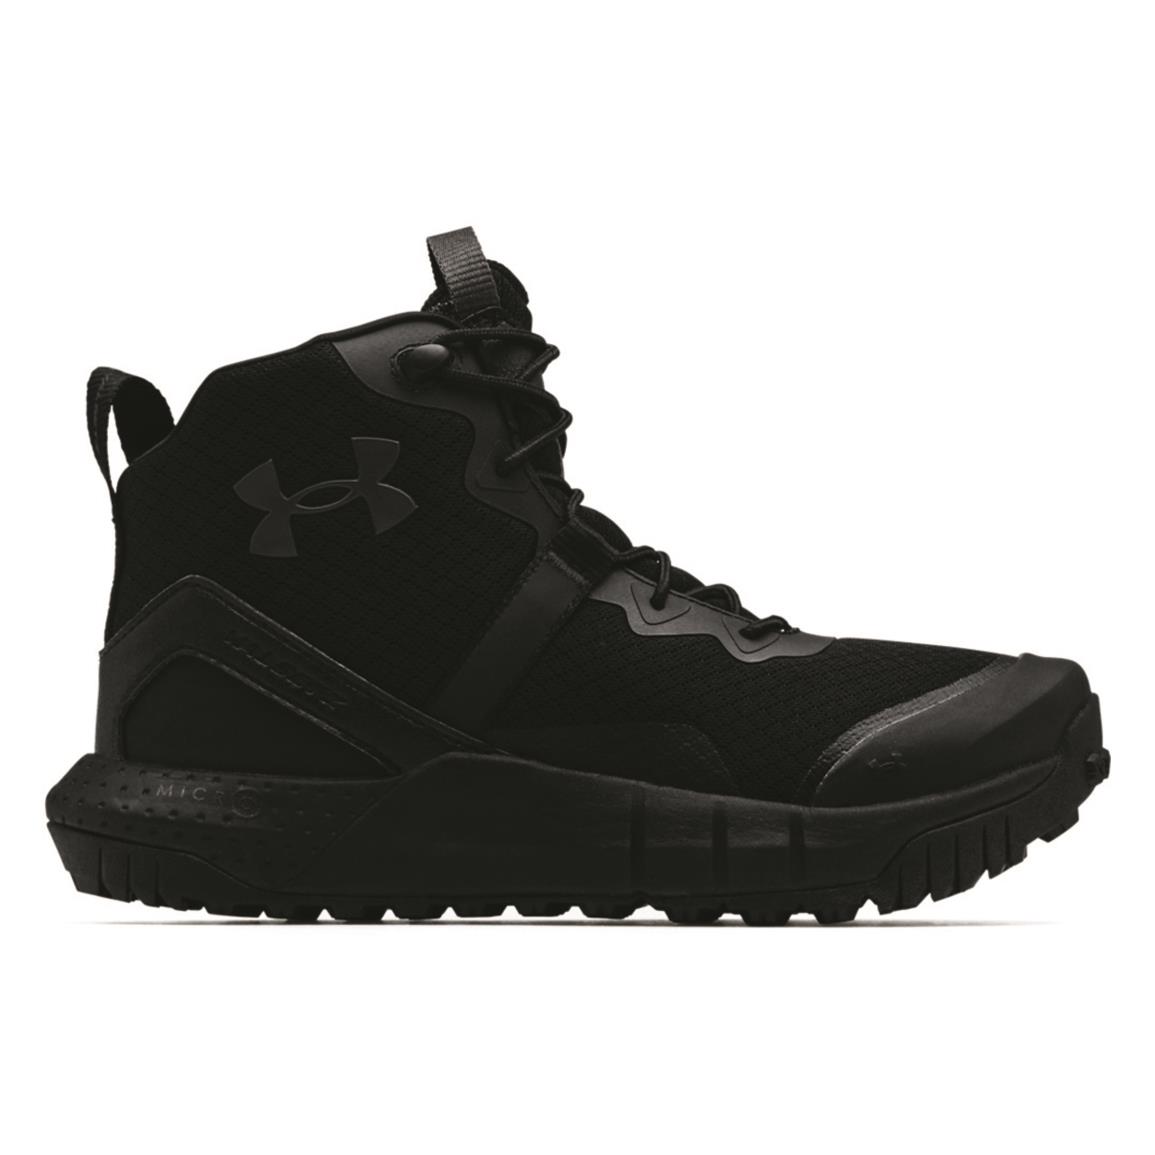 Under Armour Women's Micro G Valsetz Mid Tactical Boots, Black/black/jet Gray